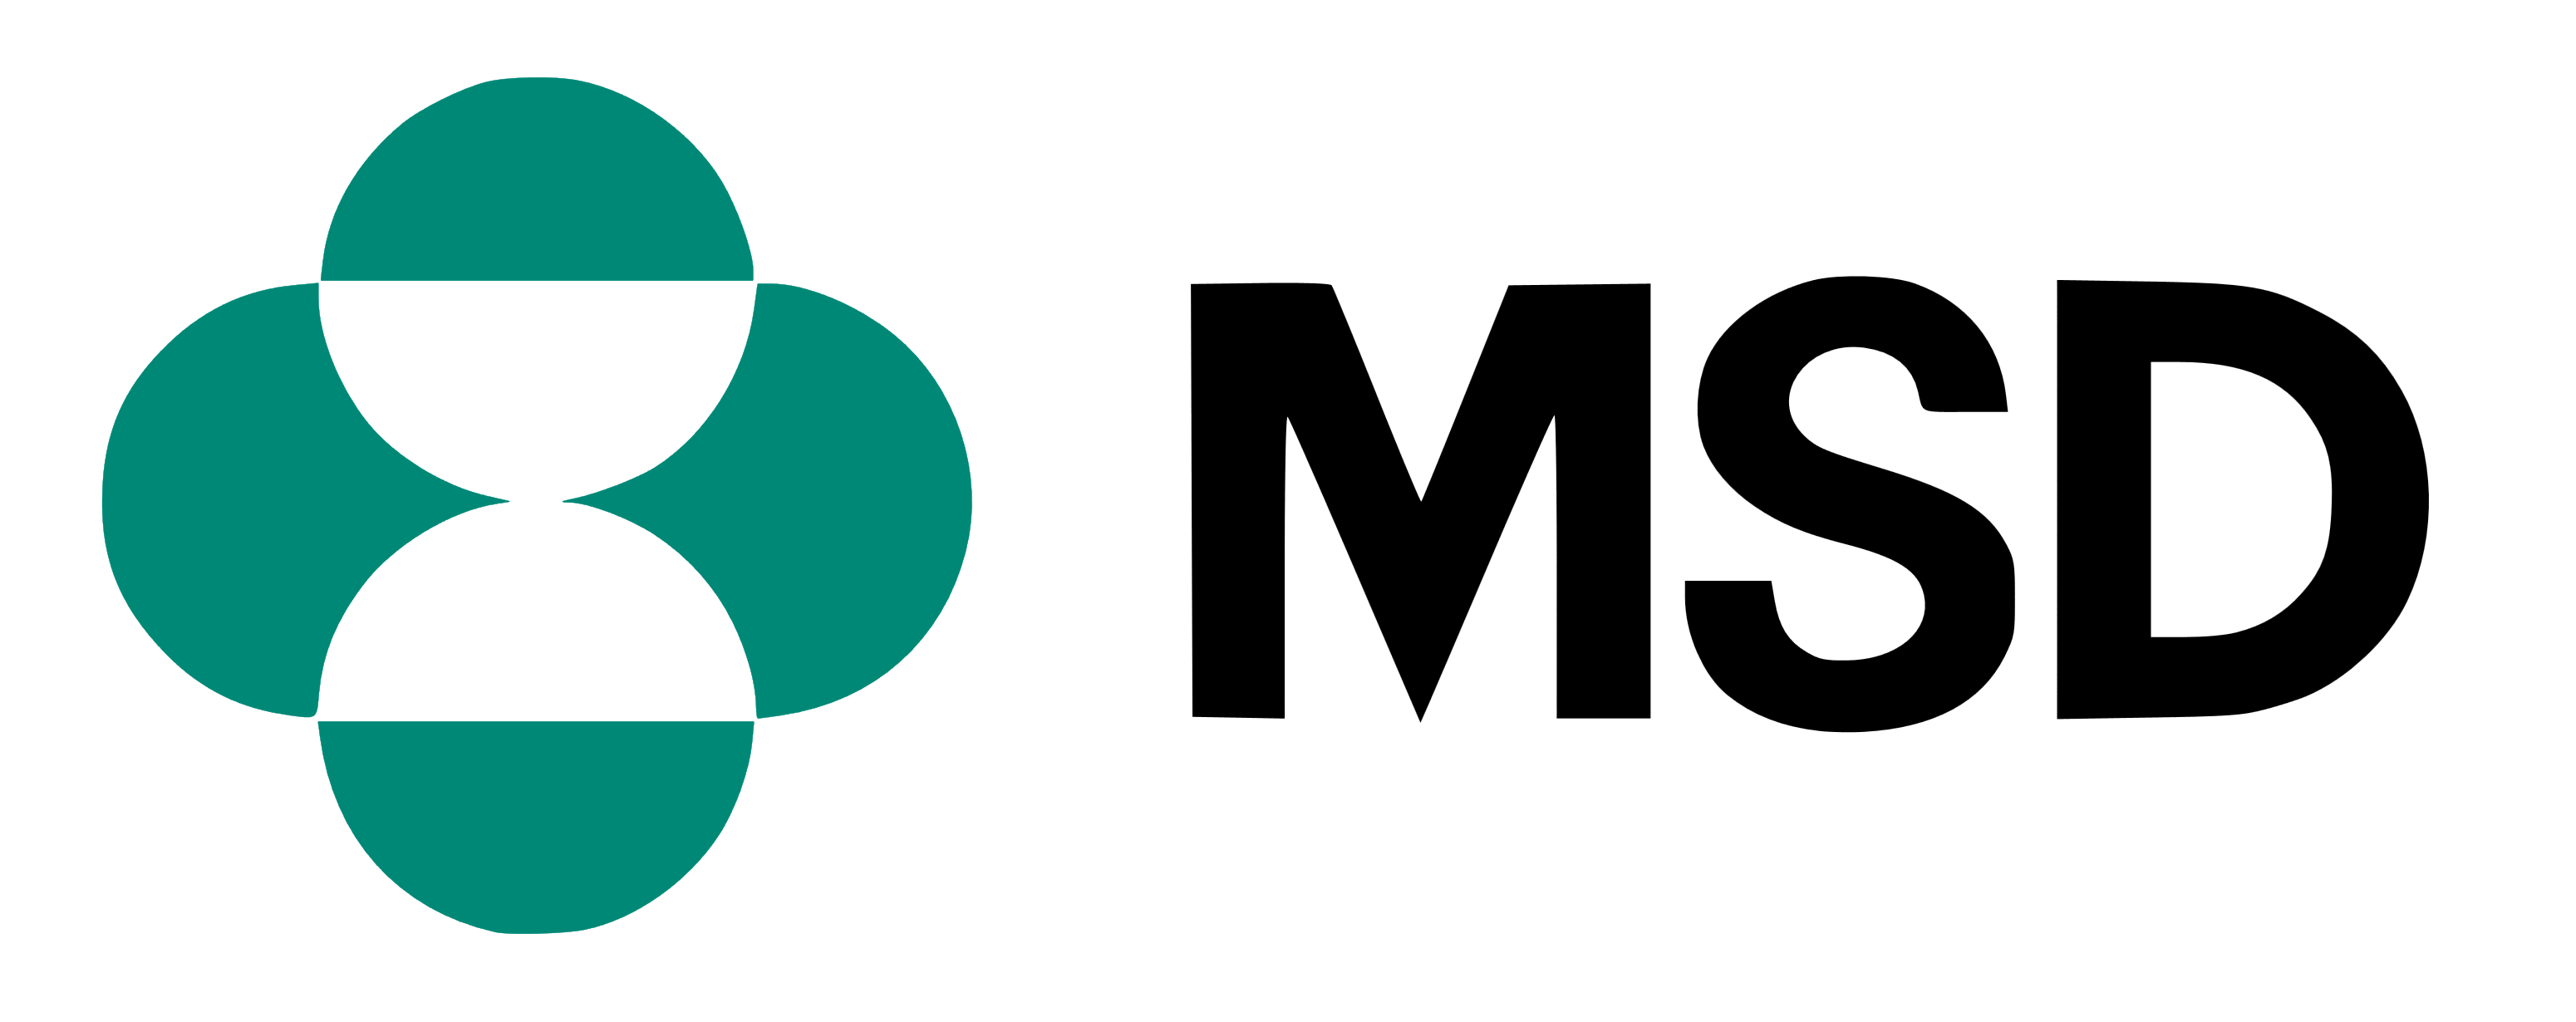 MSD_logo